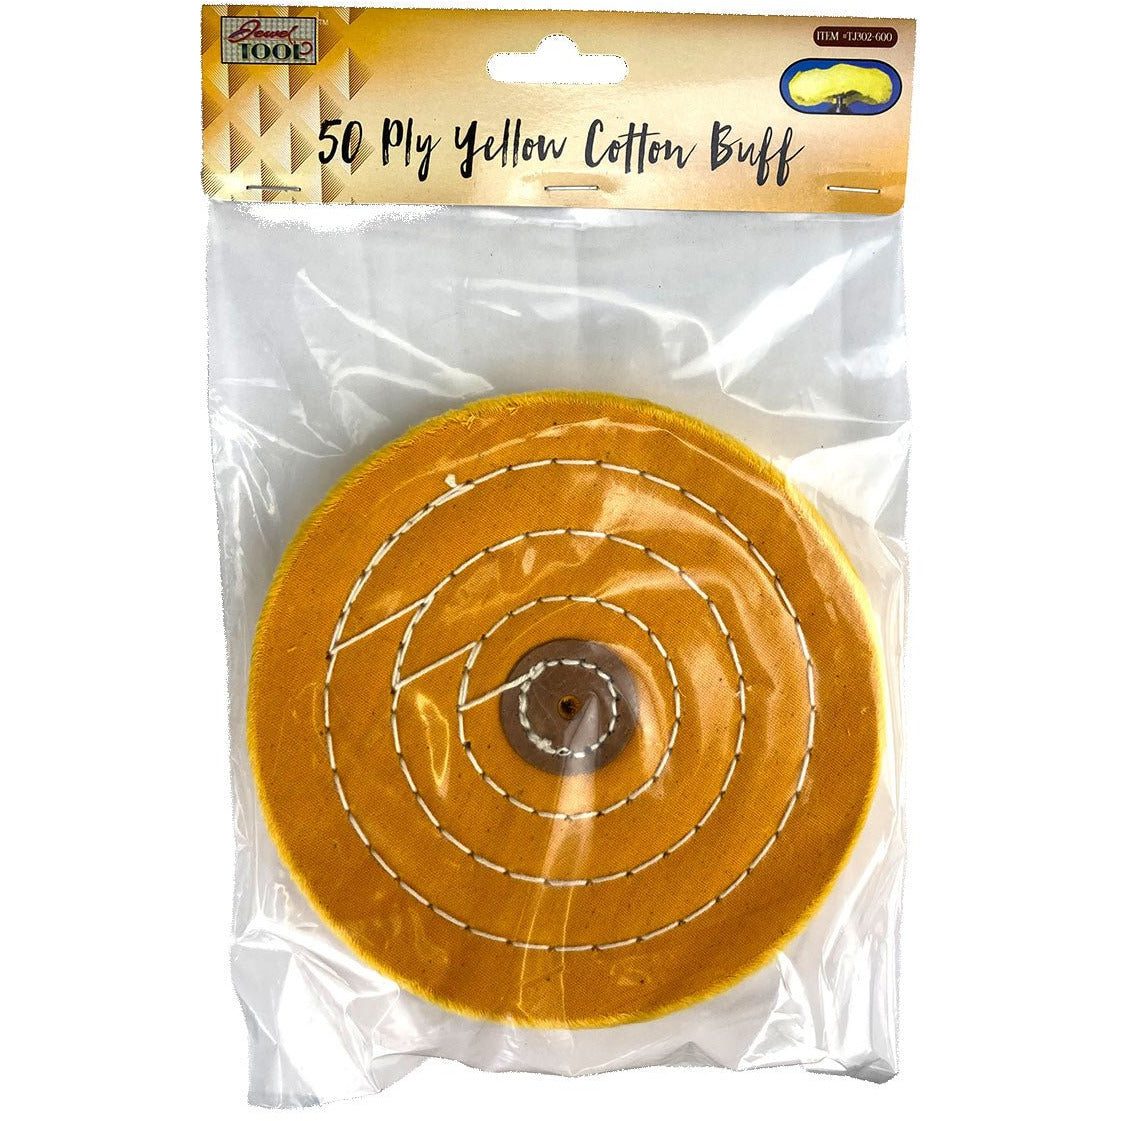 50 Ply Yellow Buffing Cloth (6") - TJ01-30260 - ToolUSA